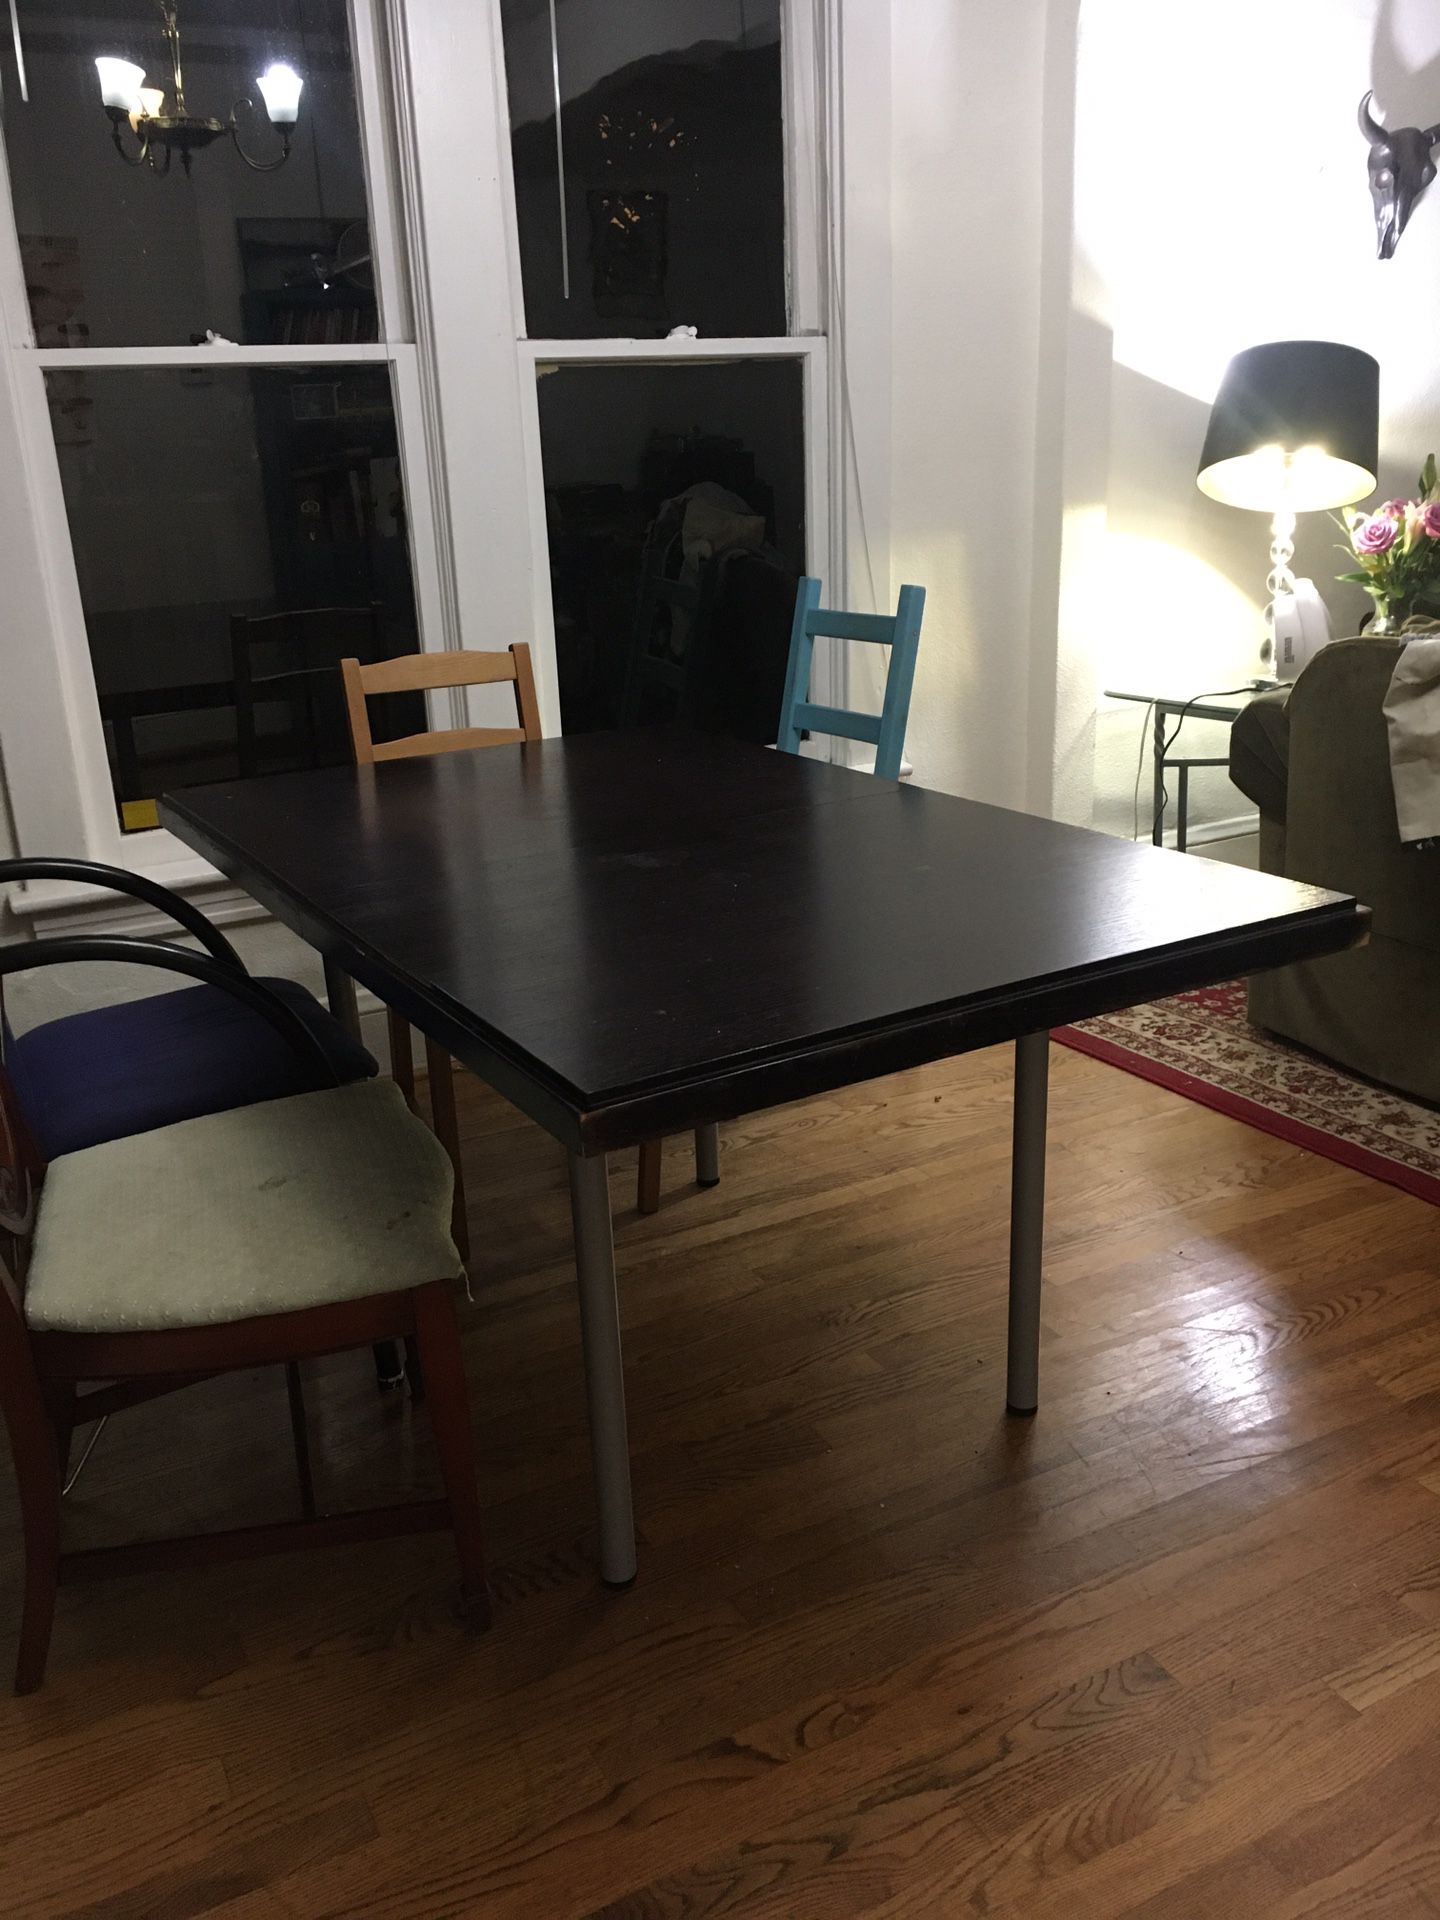 IKEA dining room table